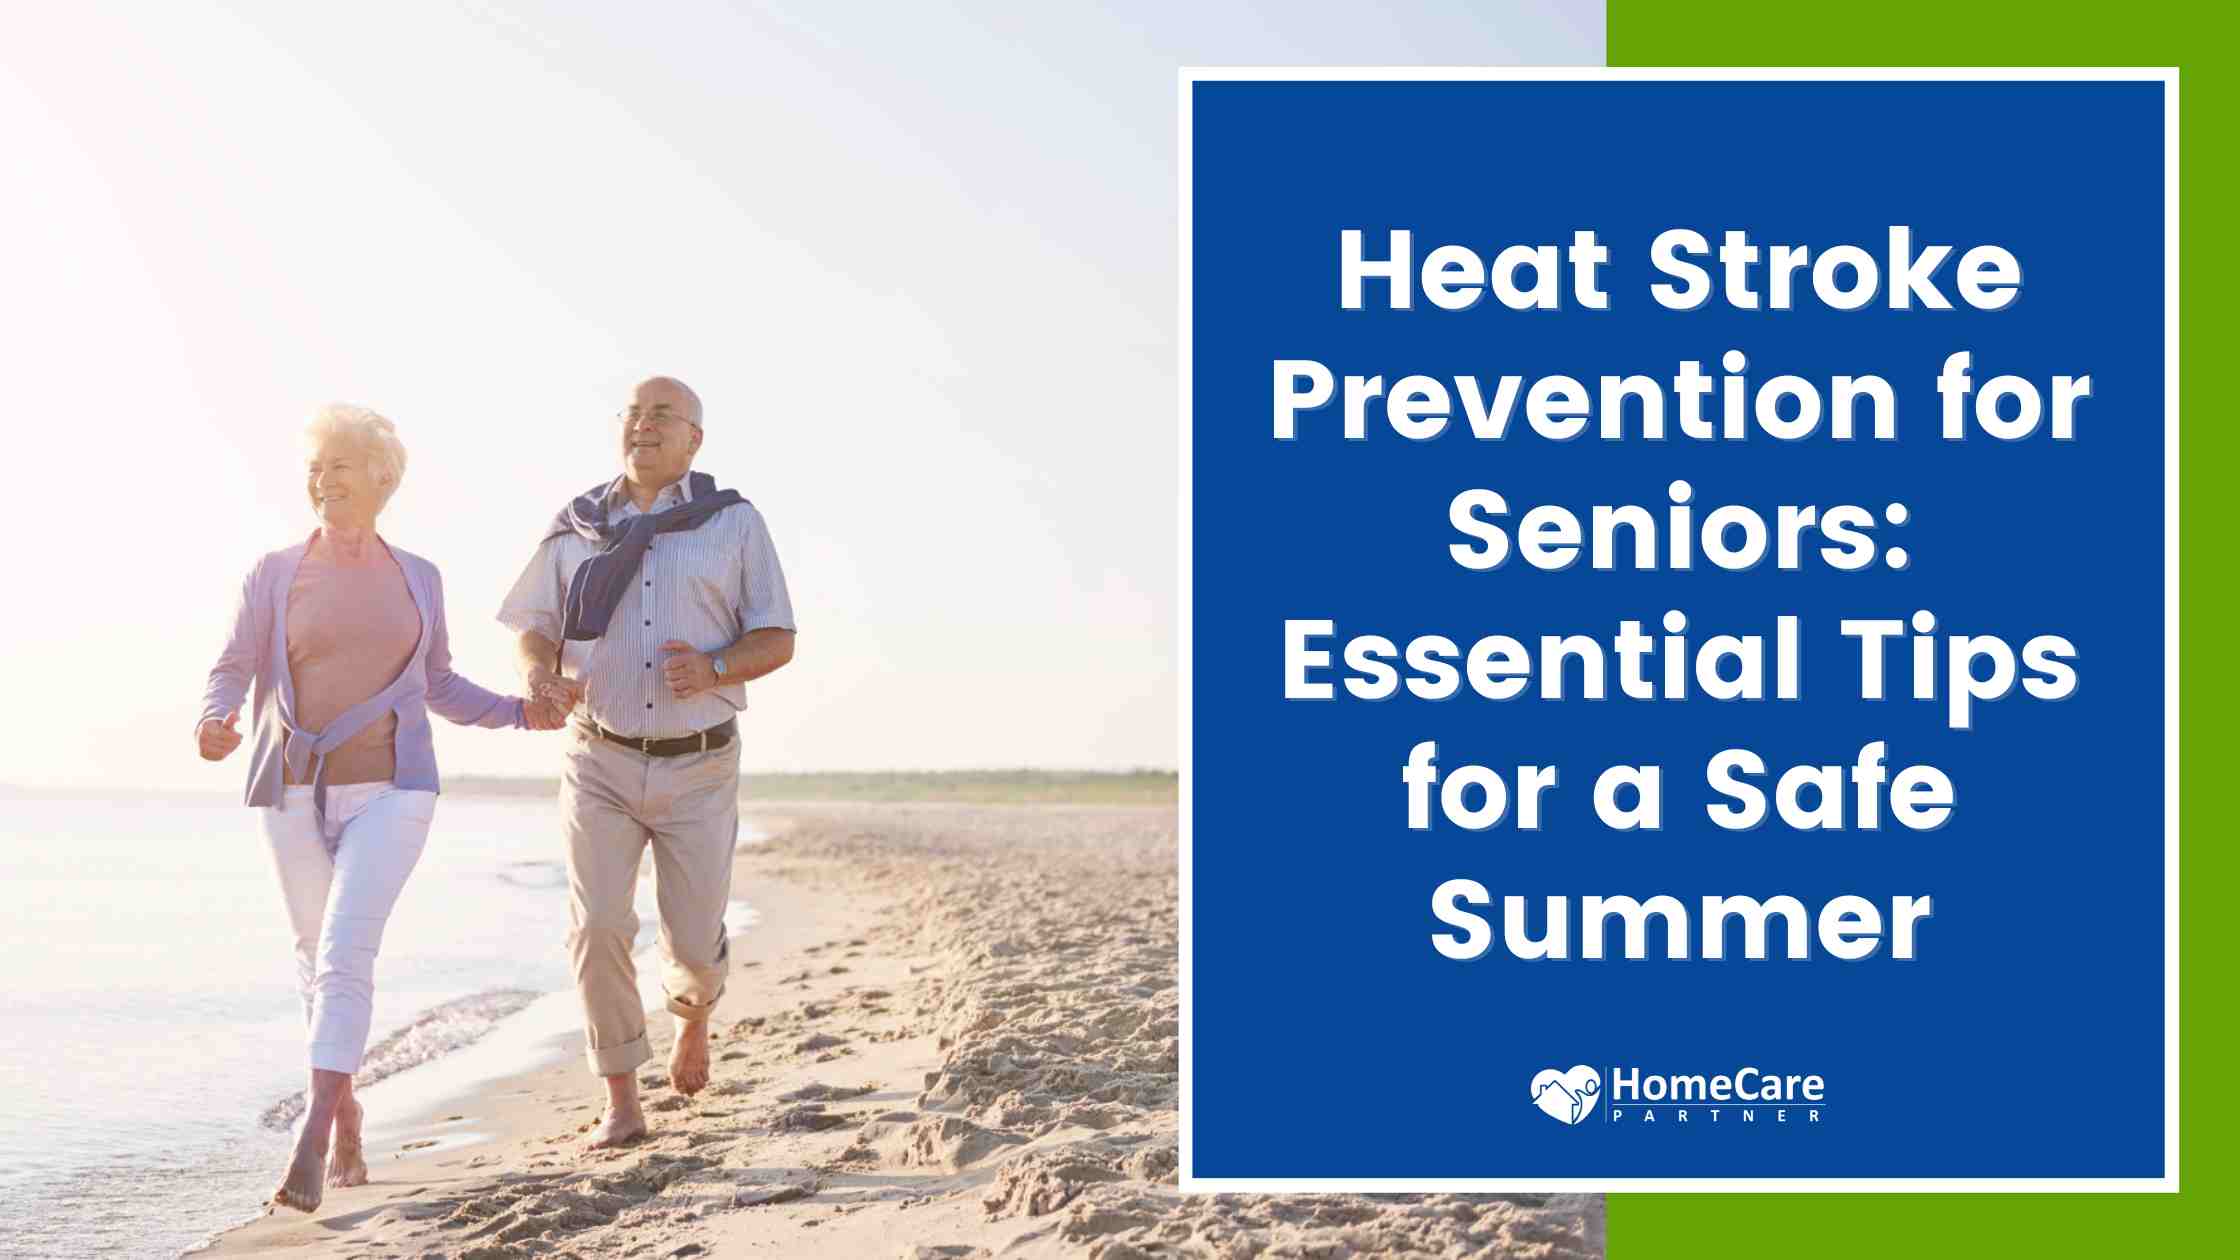 Heat Stroke Prevention for Seniors: Essential Tips for a Safe Summer